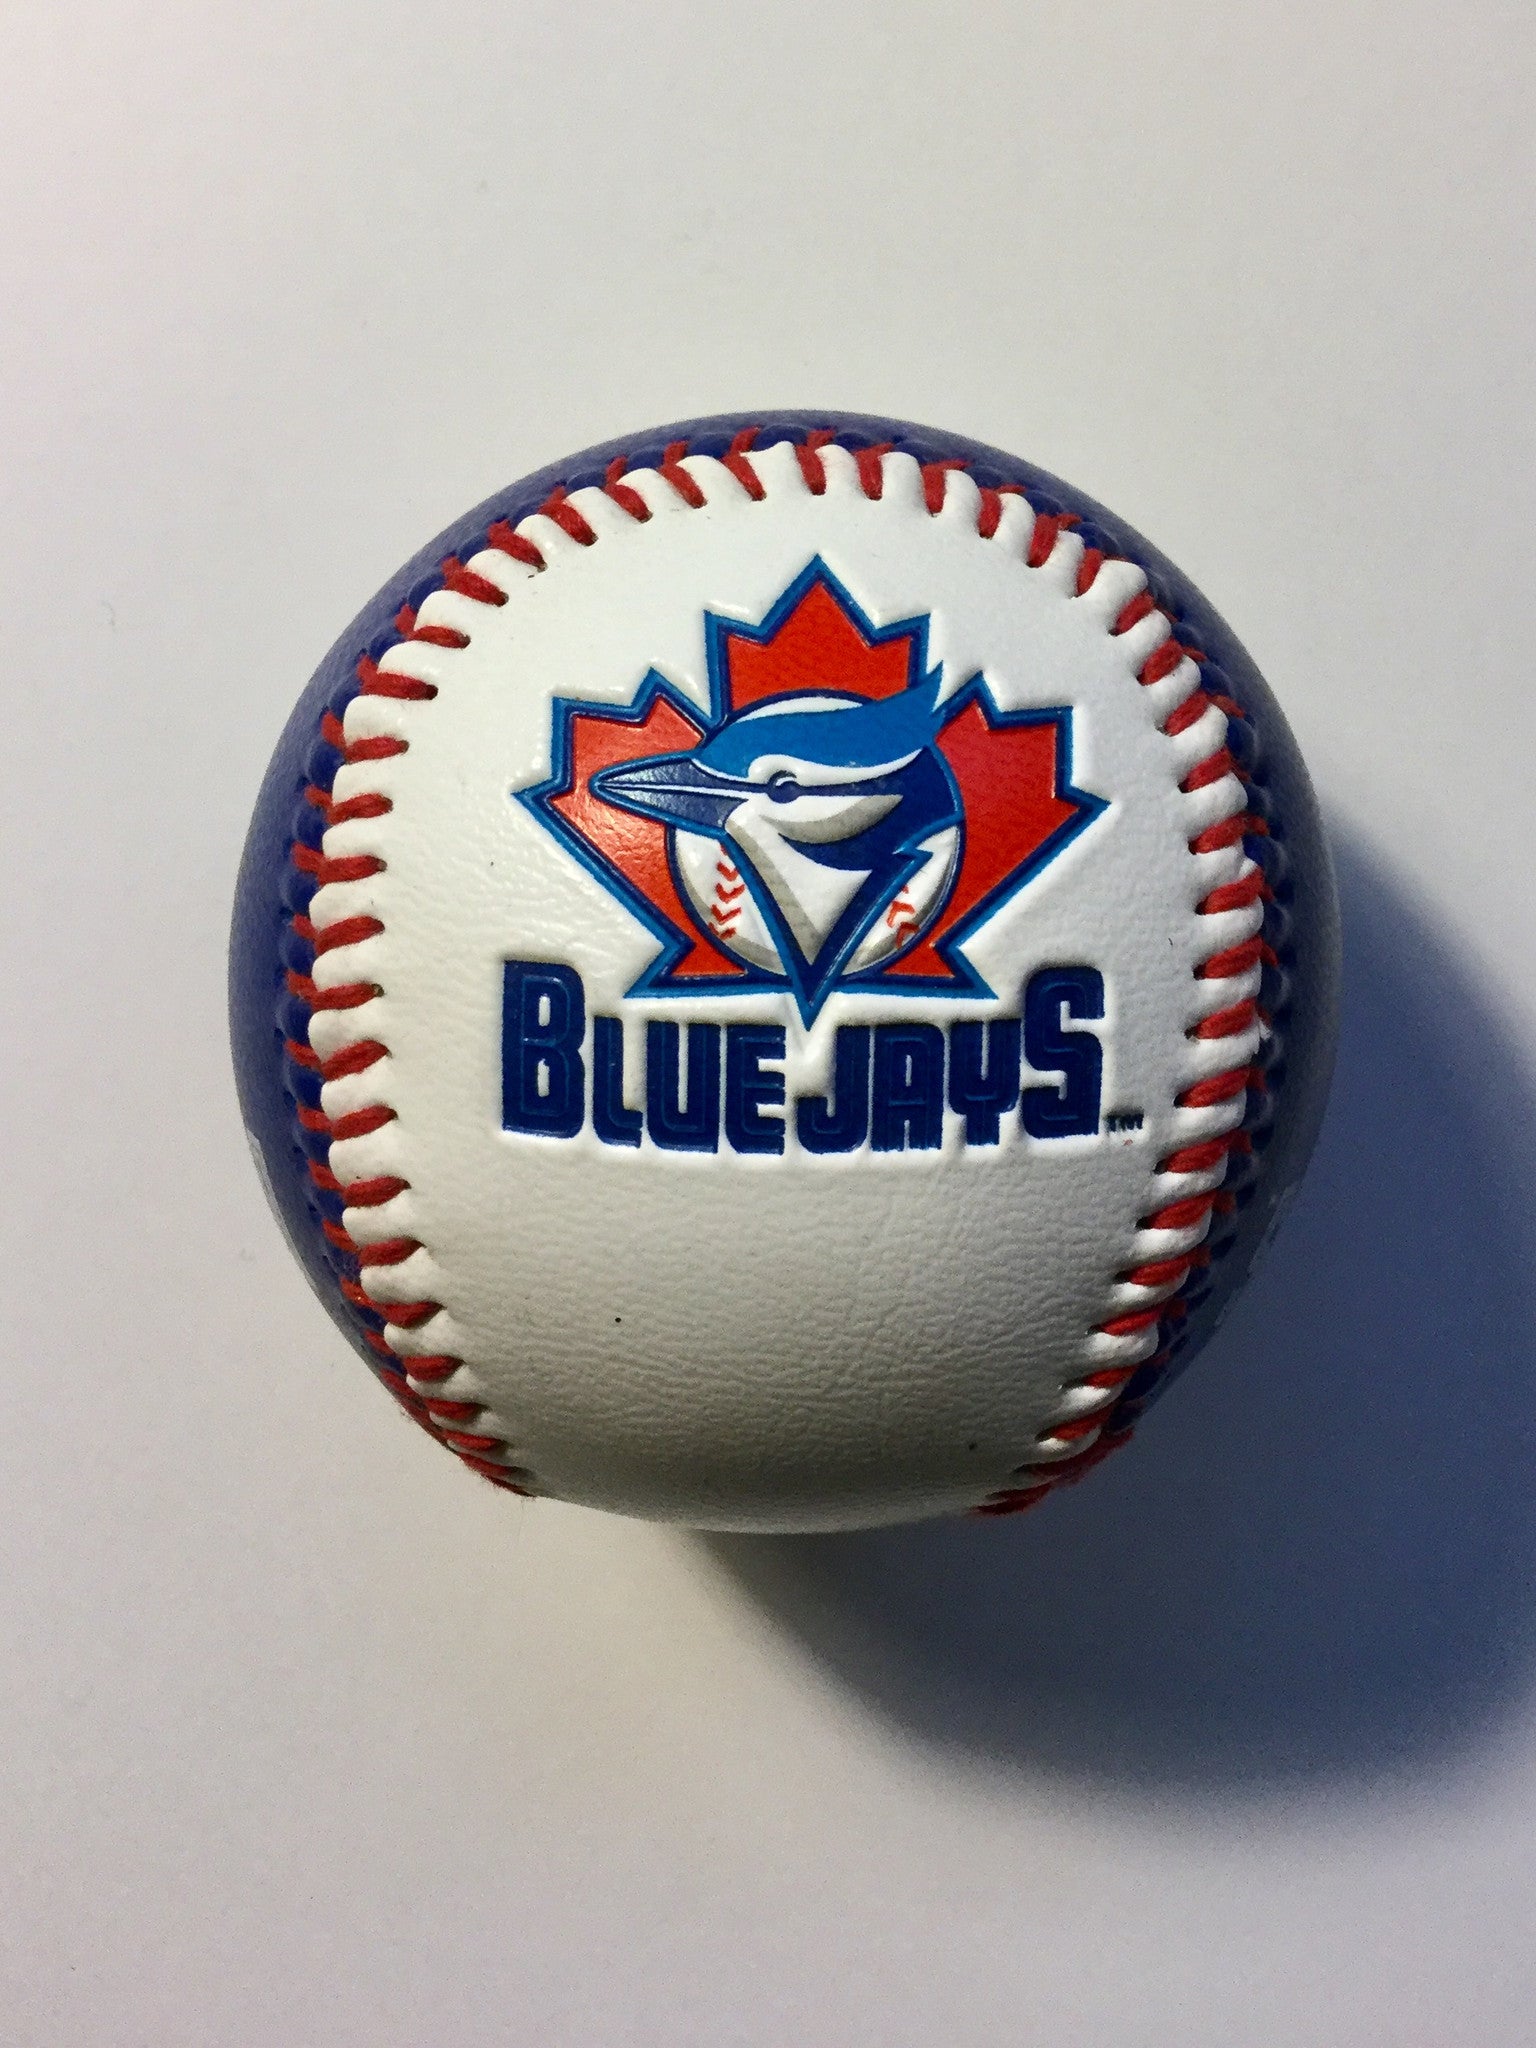 Blue Jays limited issued blue/White baseball  2000